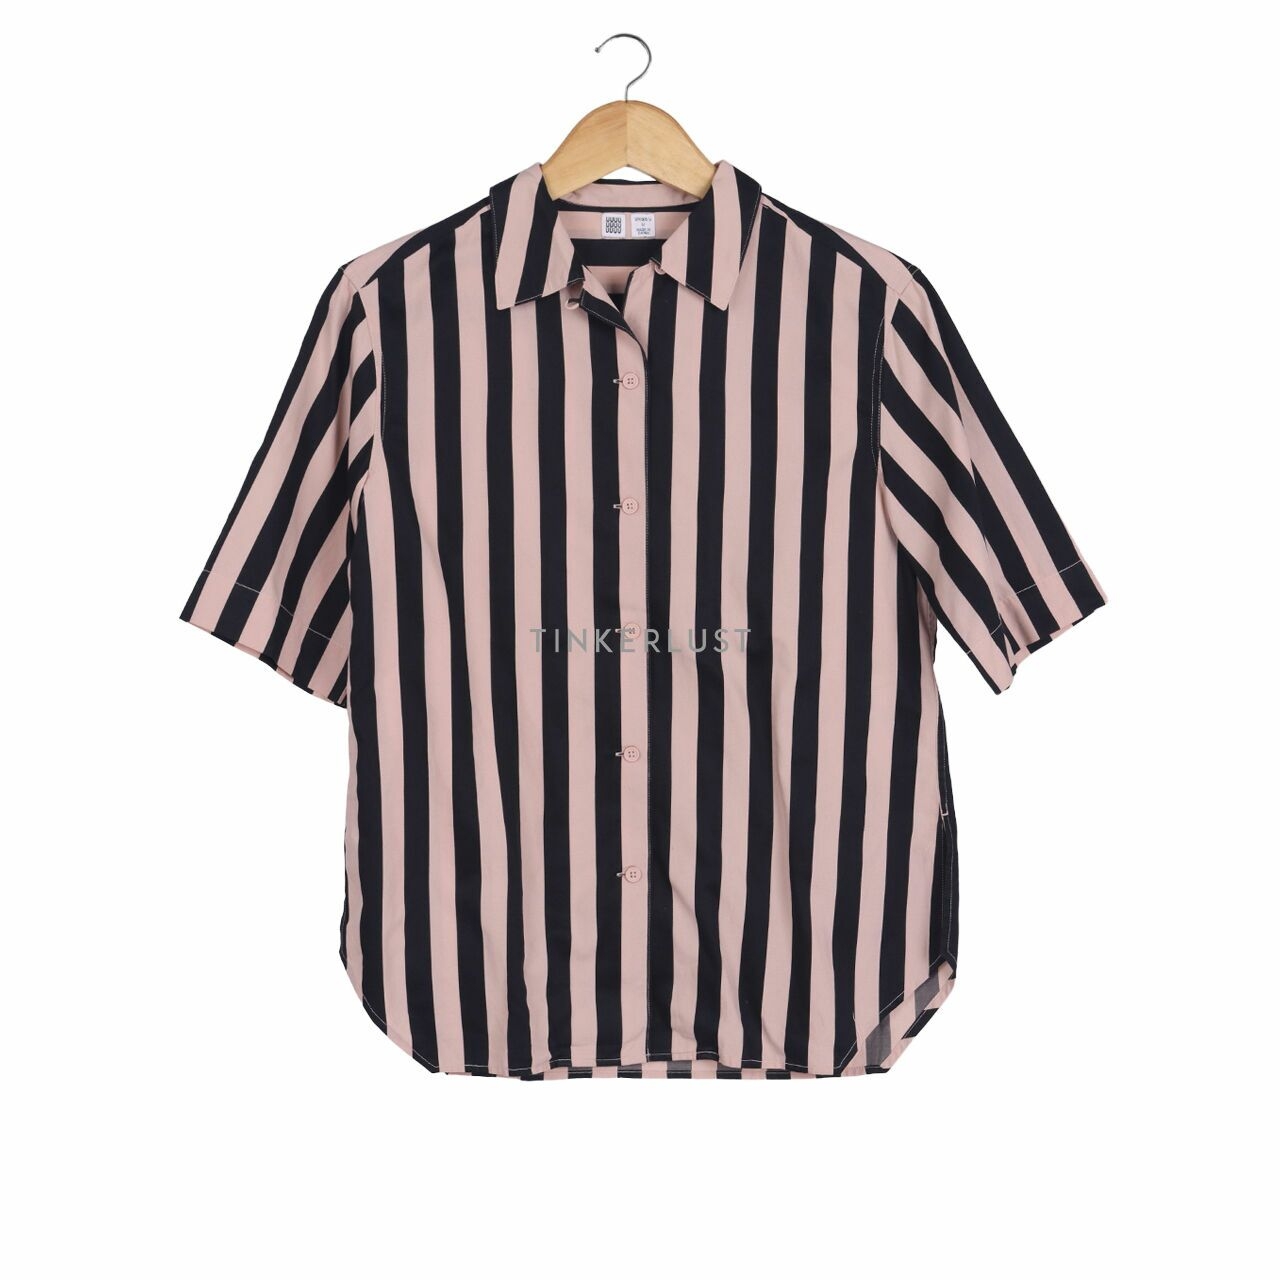 UNIQLO Black & Pink Stripes Shirt